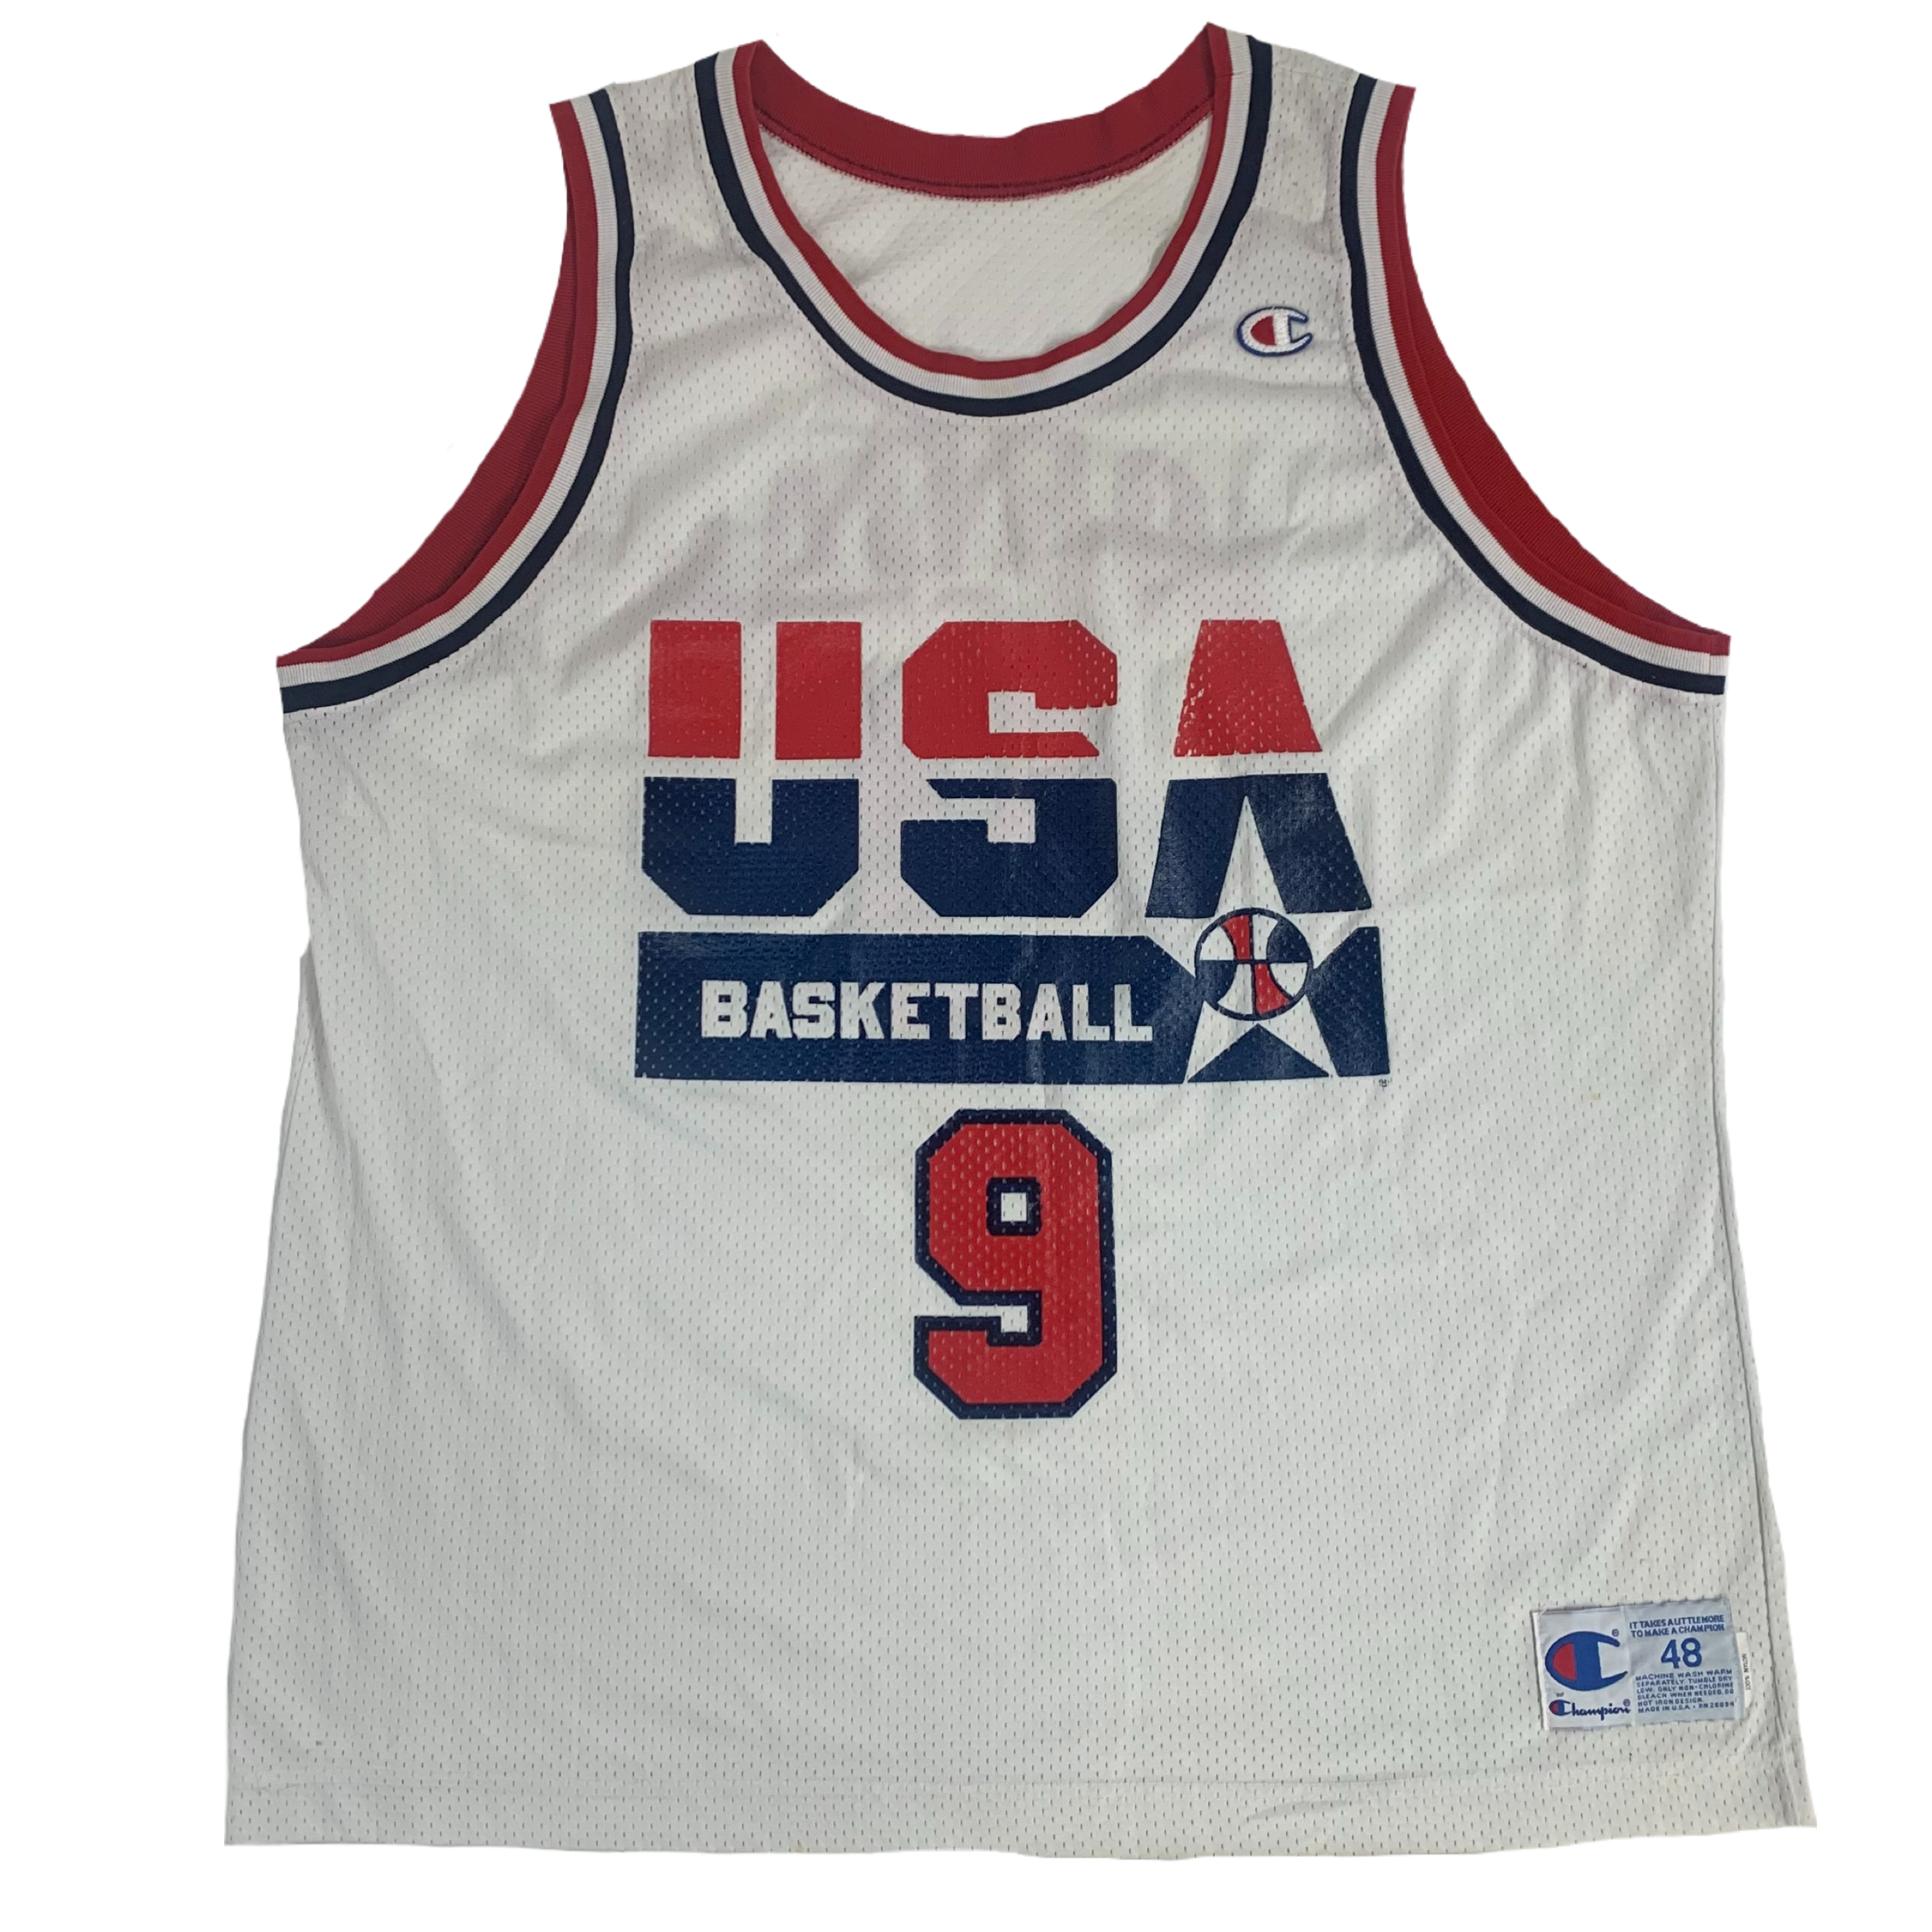 USA Dream Team Jersey, Throwback USA Basketball Dream Team Gear